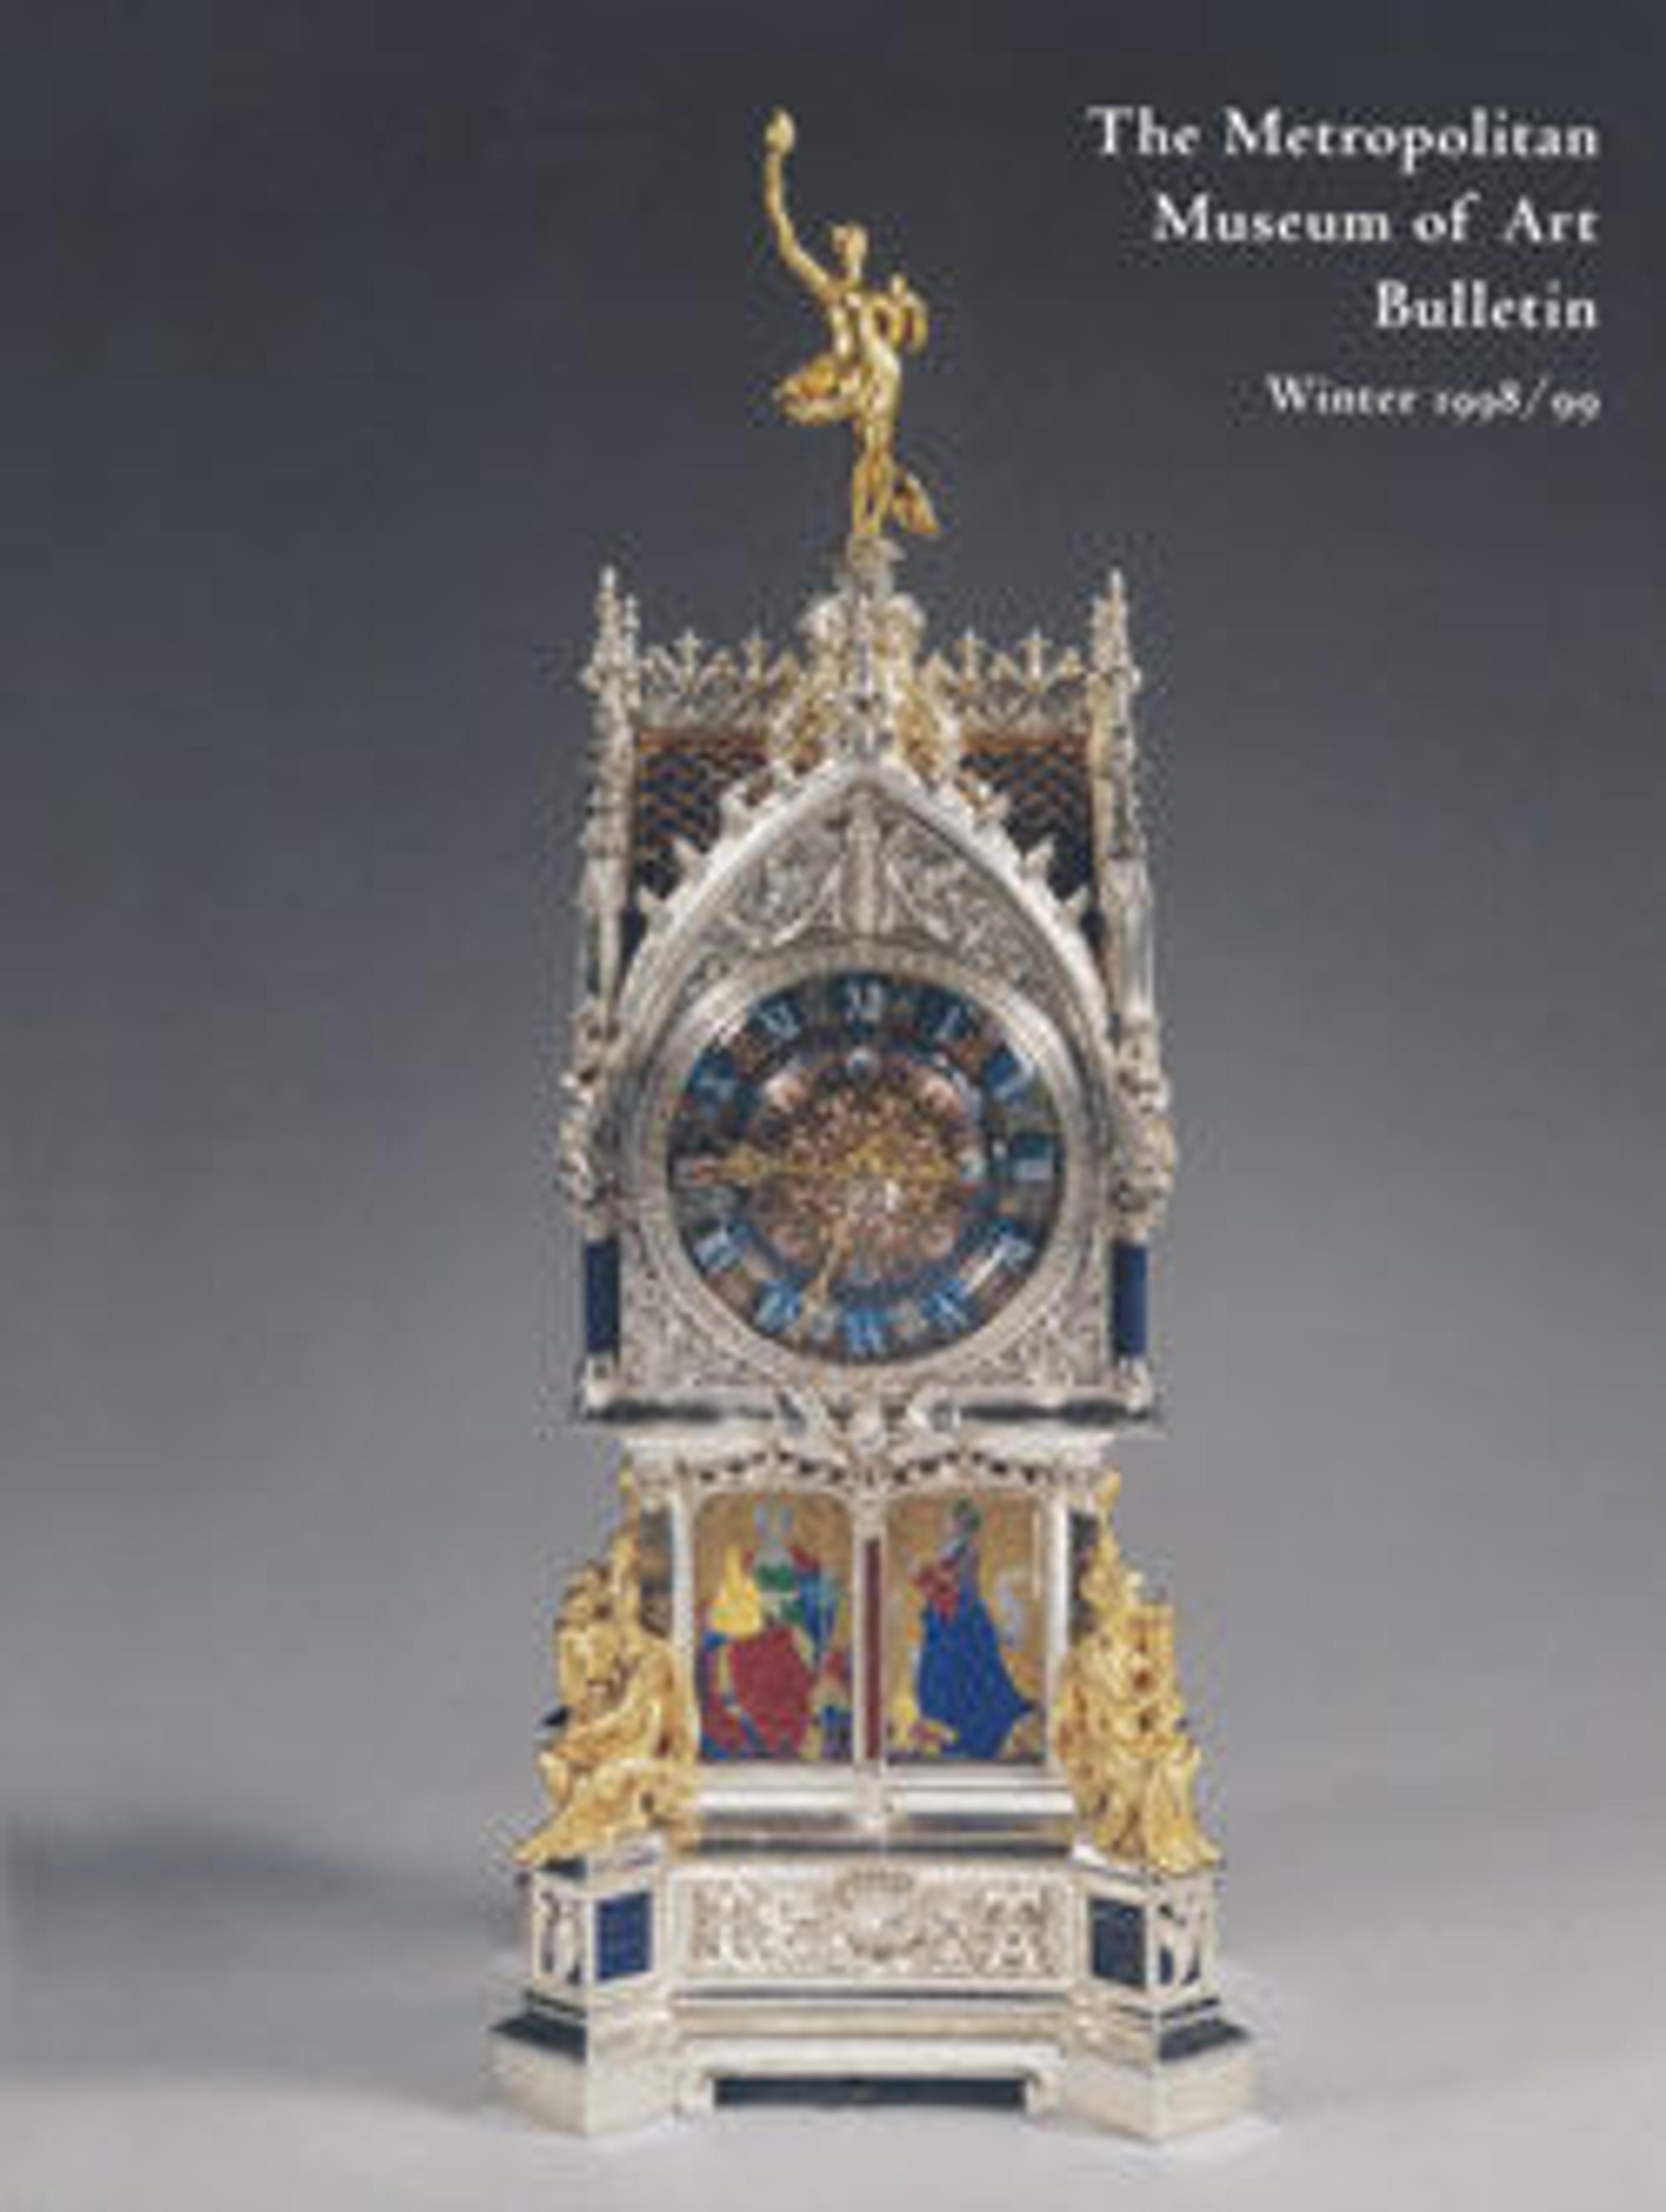 "European Decorative Arts at the World's Fairs: 1850-1900": The Metropolitan Museum of Art Bulletin, v. 56, no. 3 (Winter, 1998-1999)